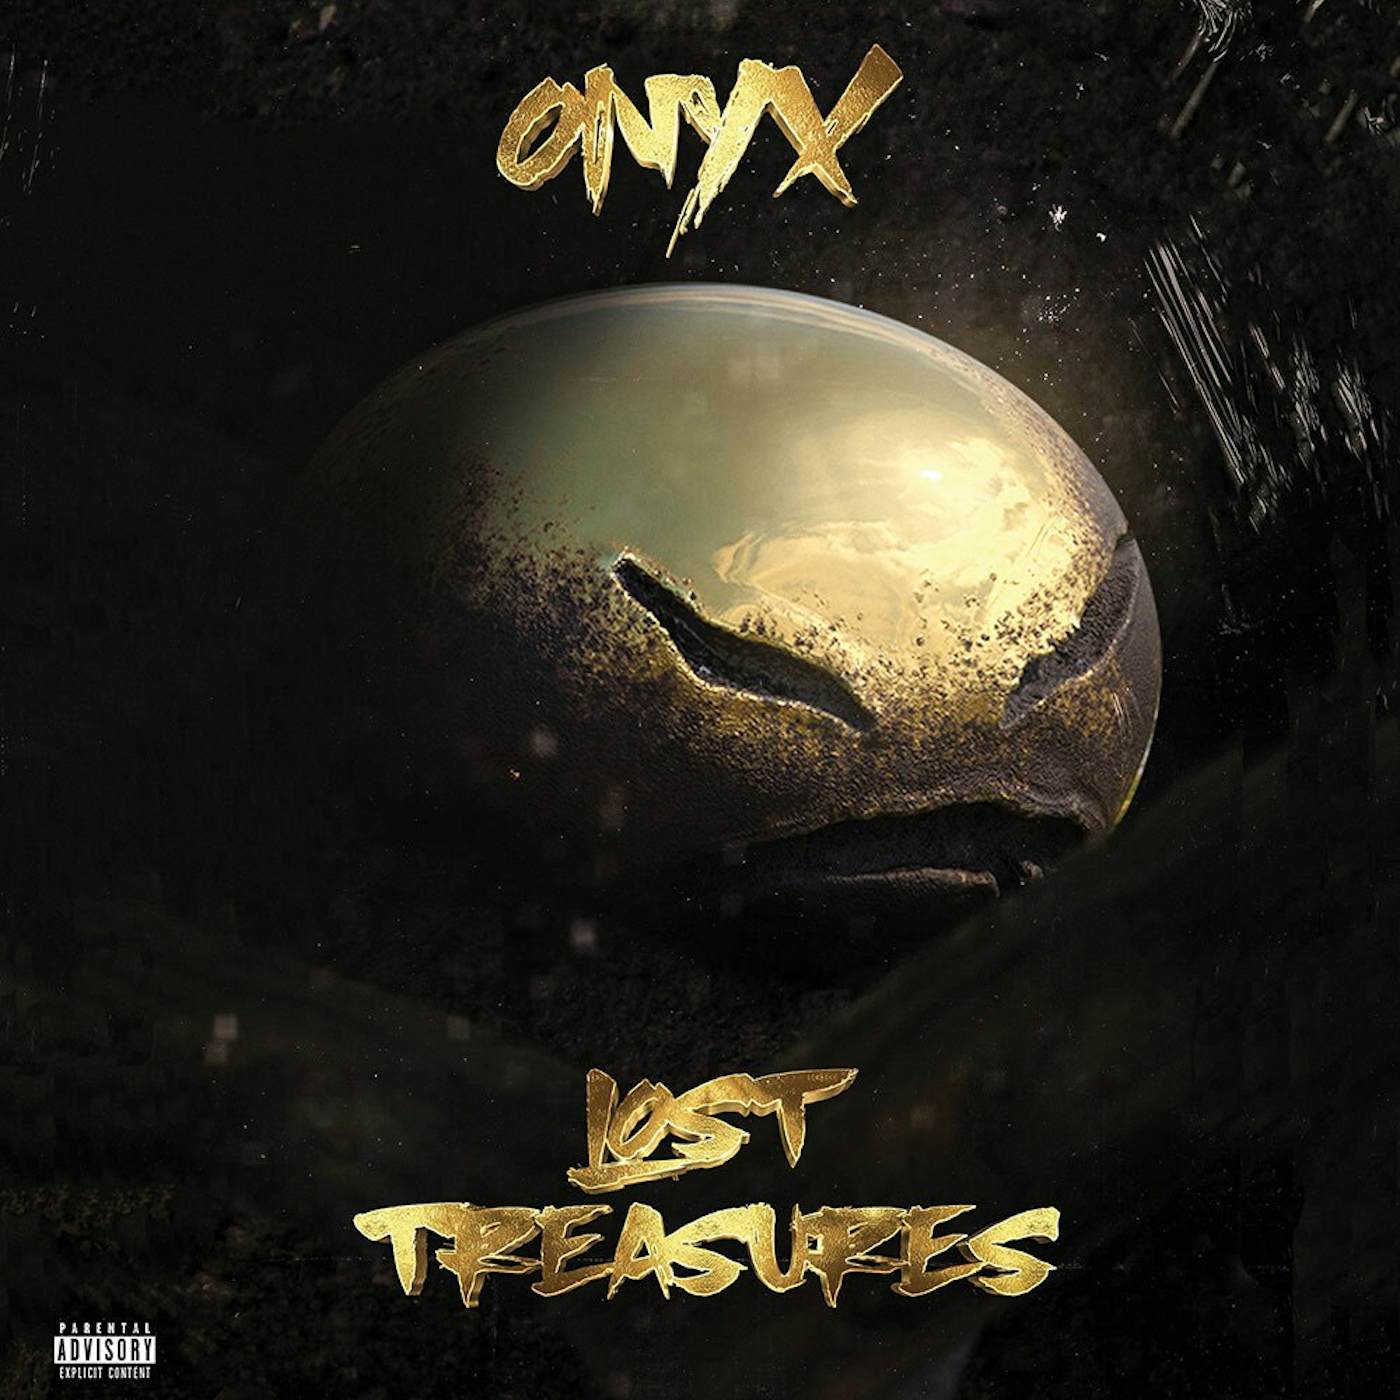 Onyx LOST TREASURES CD